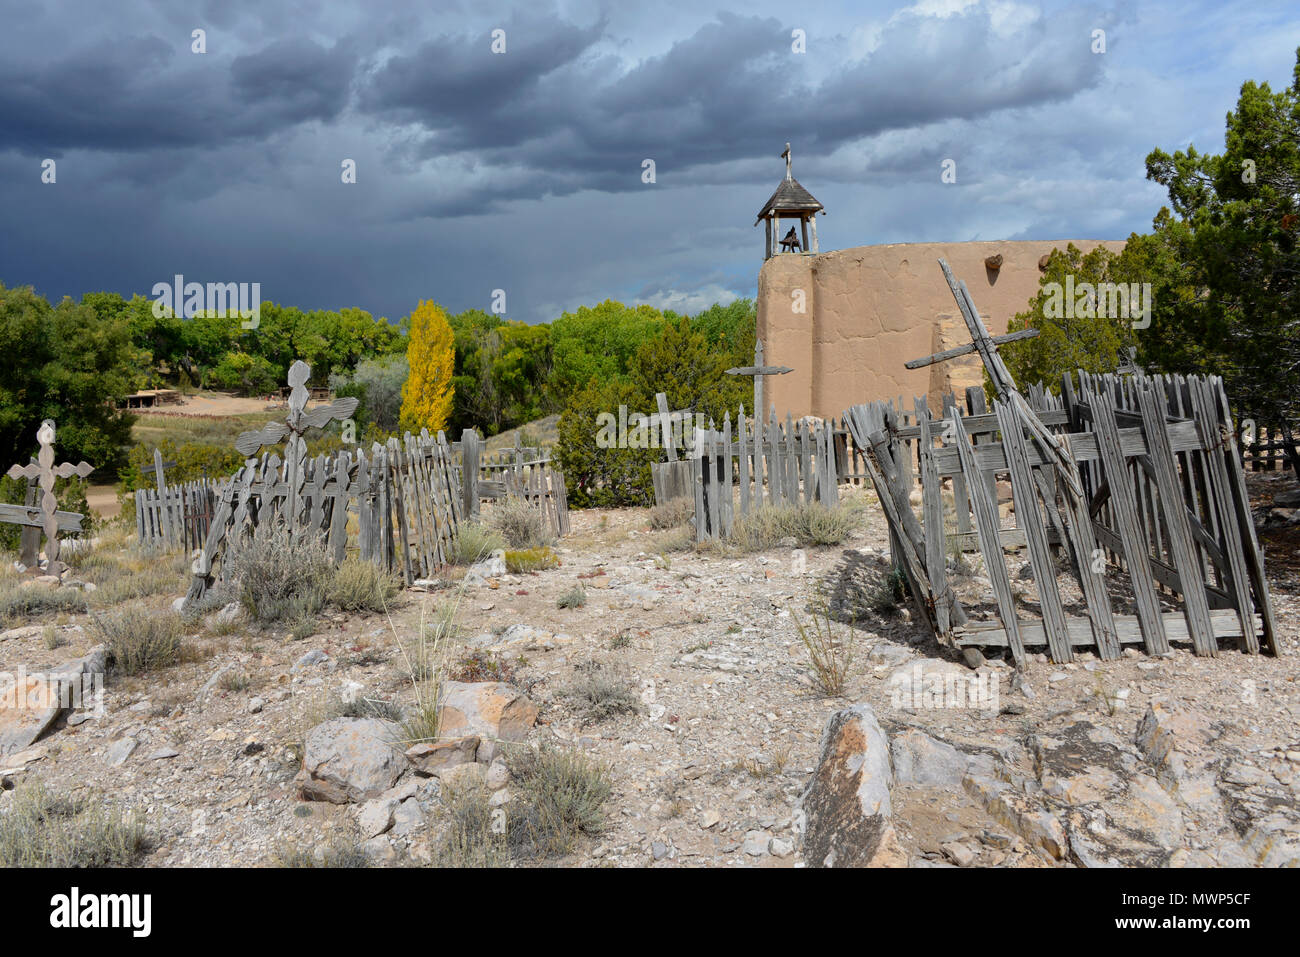 El Rancho de Las Golondrinas (Ranch des hirondelles), adobe Penitente colonial espagnol avec cimetière, près de Santa Fe, NM, États-Unis Banque D'Images